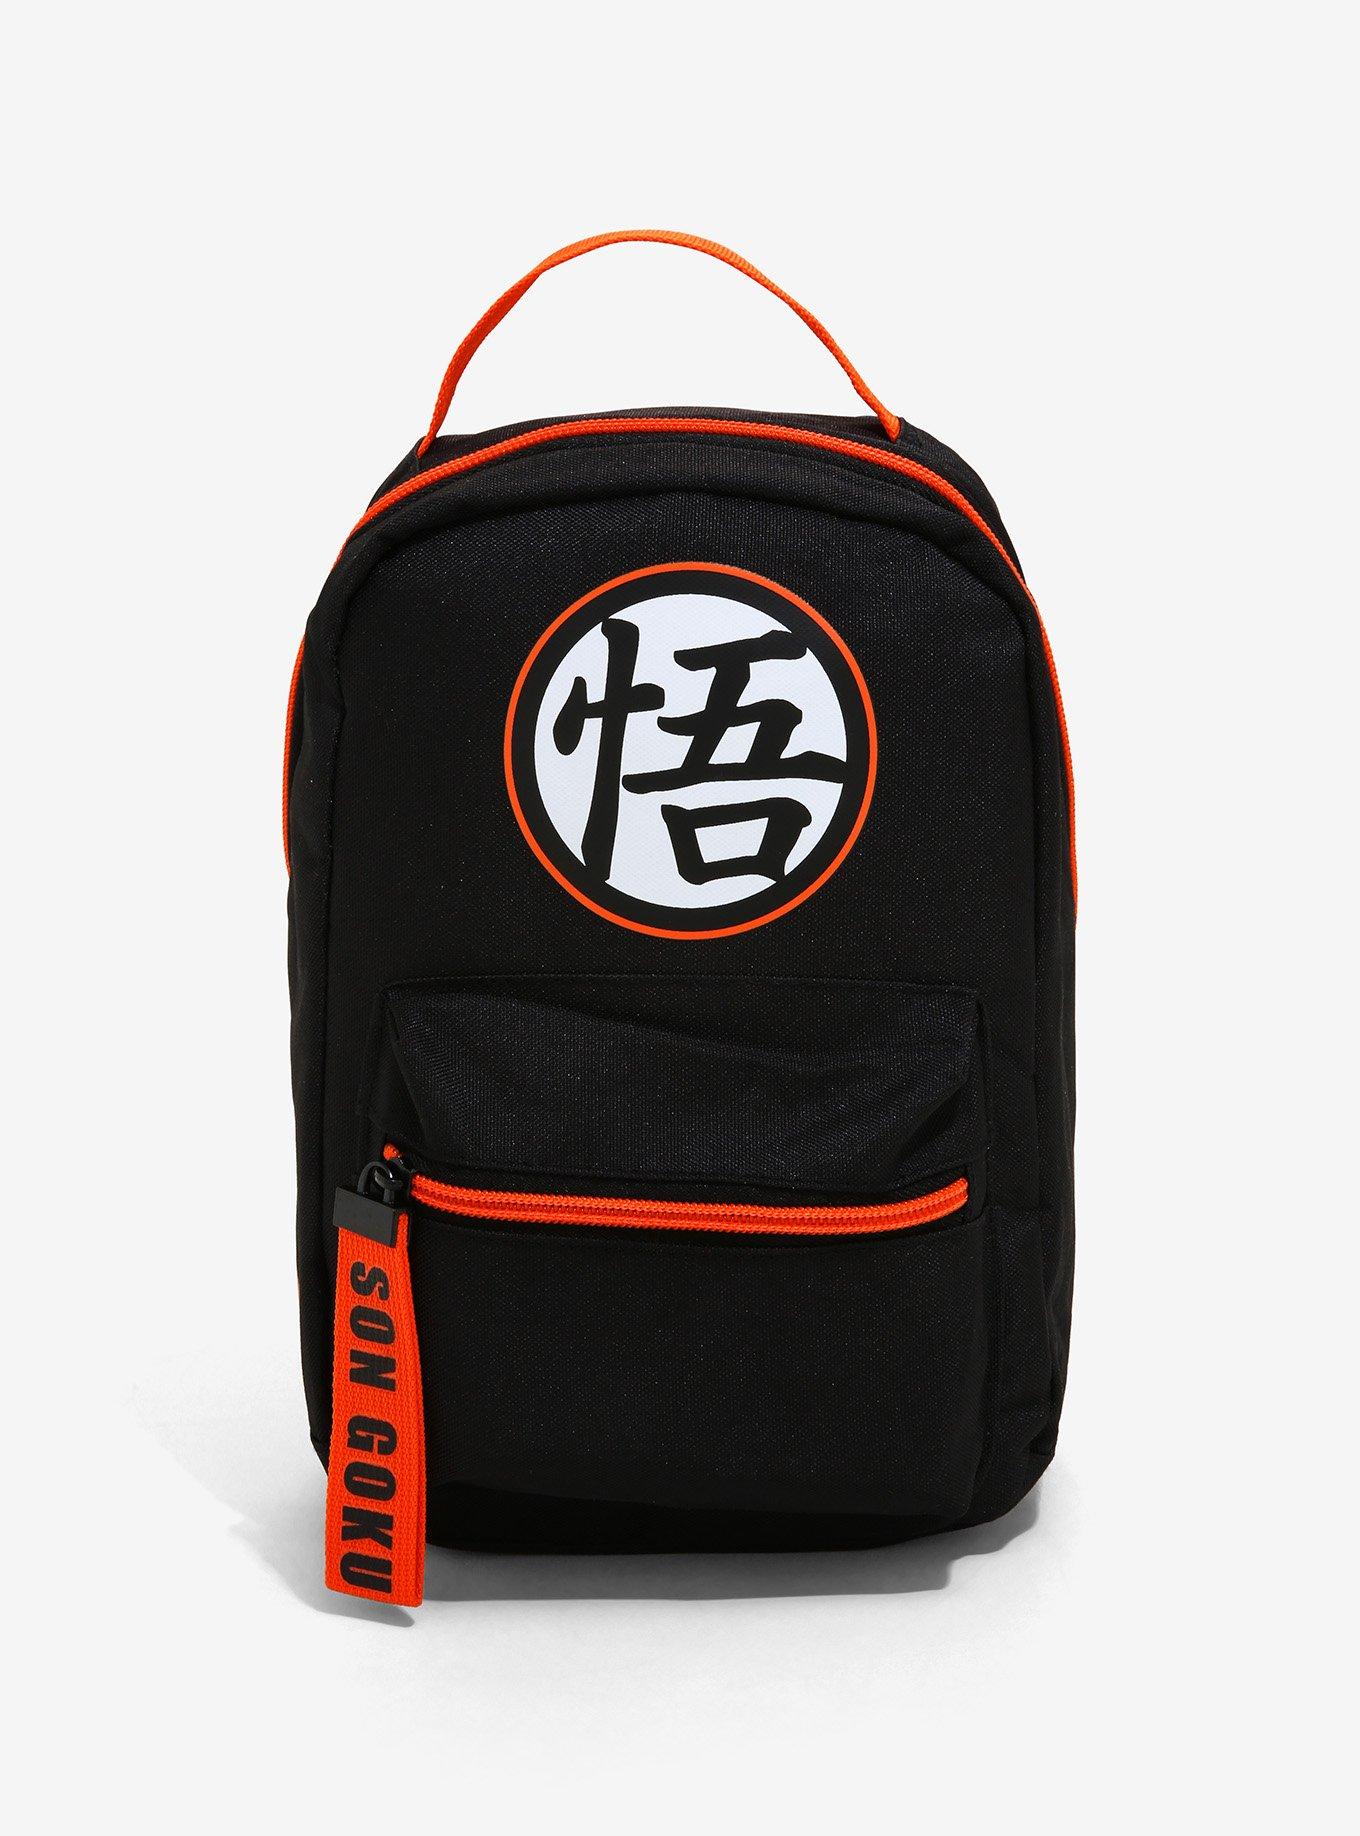 Dragon Ball Z Son Goku 59 Design Minimalist Orange Backpack